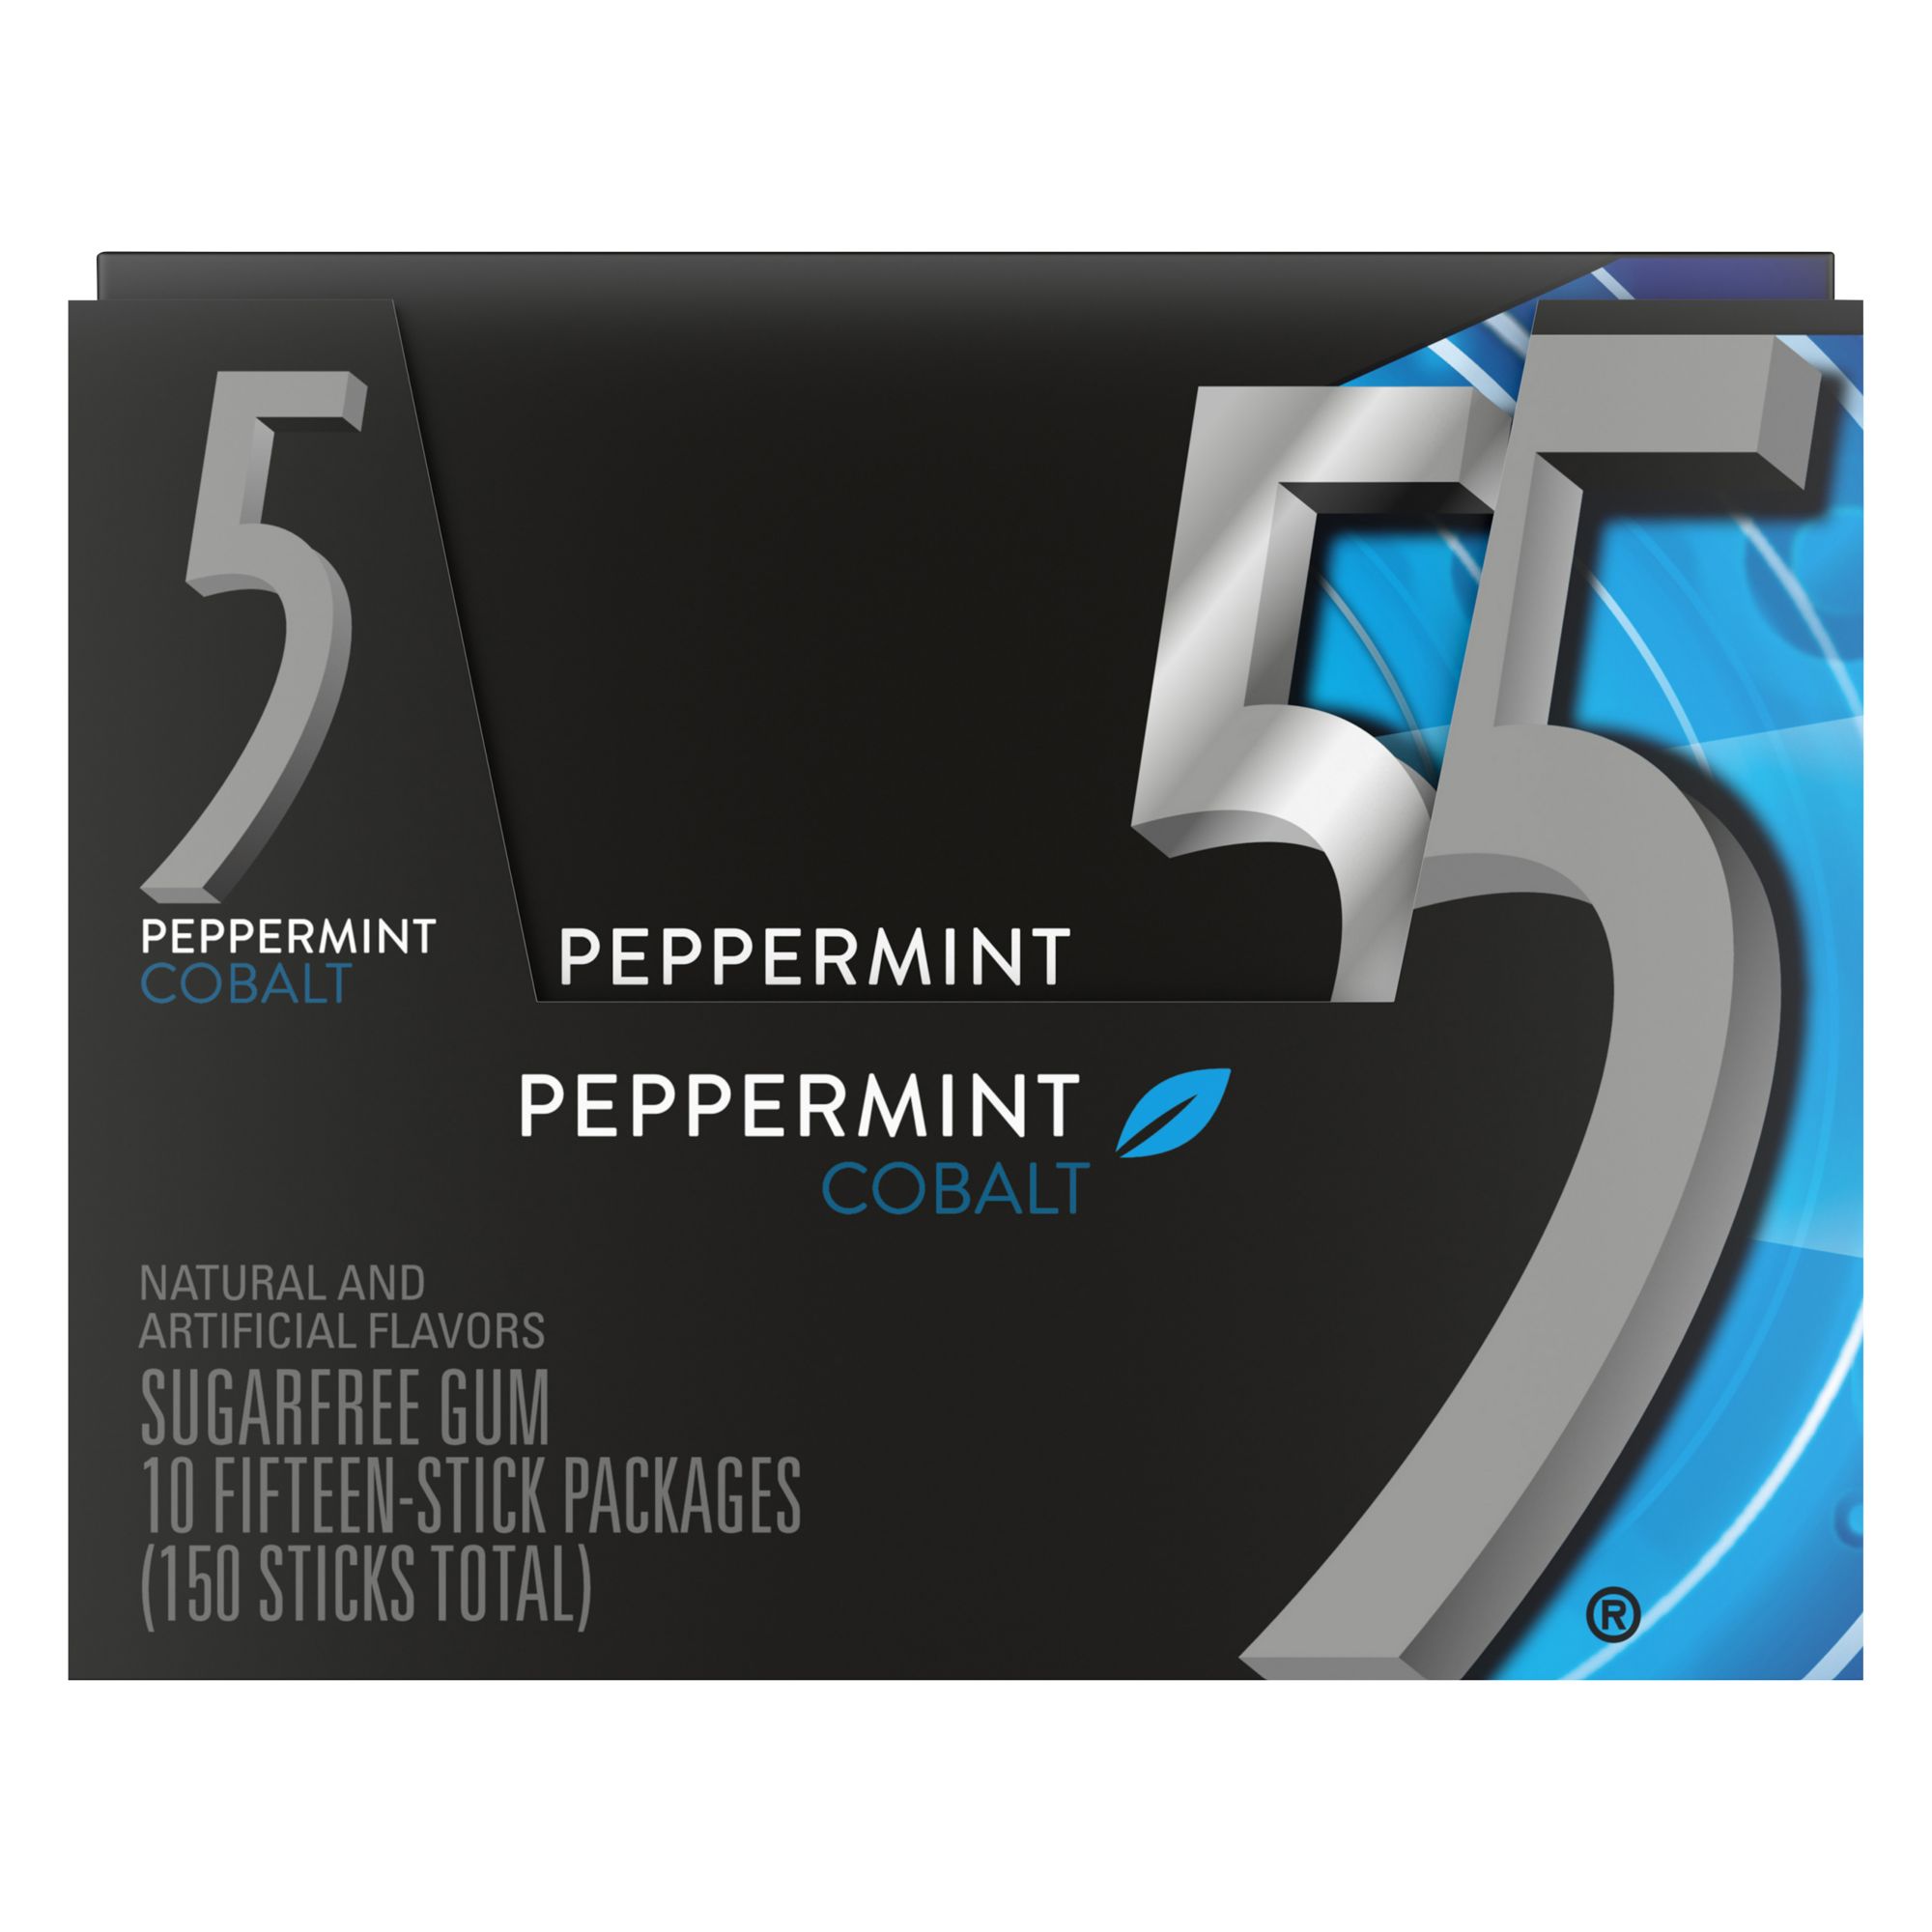 Wrigley 5 Cobalt Peppermint Sugar-Free Gum, 15 Count (Pack of 10)